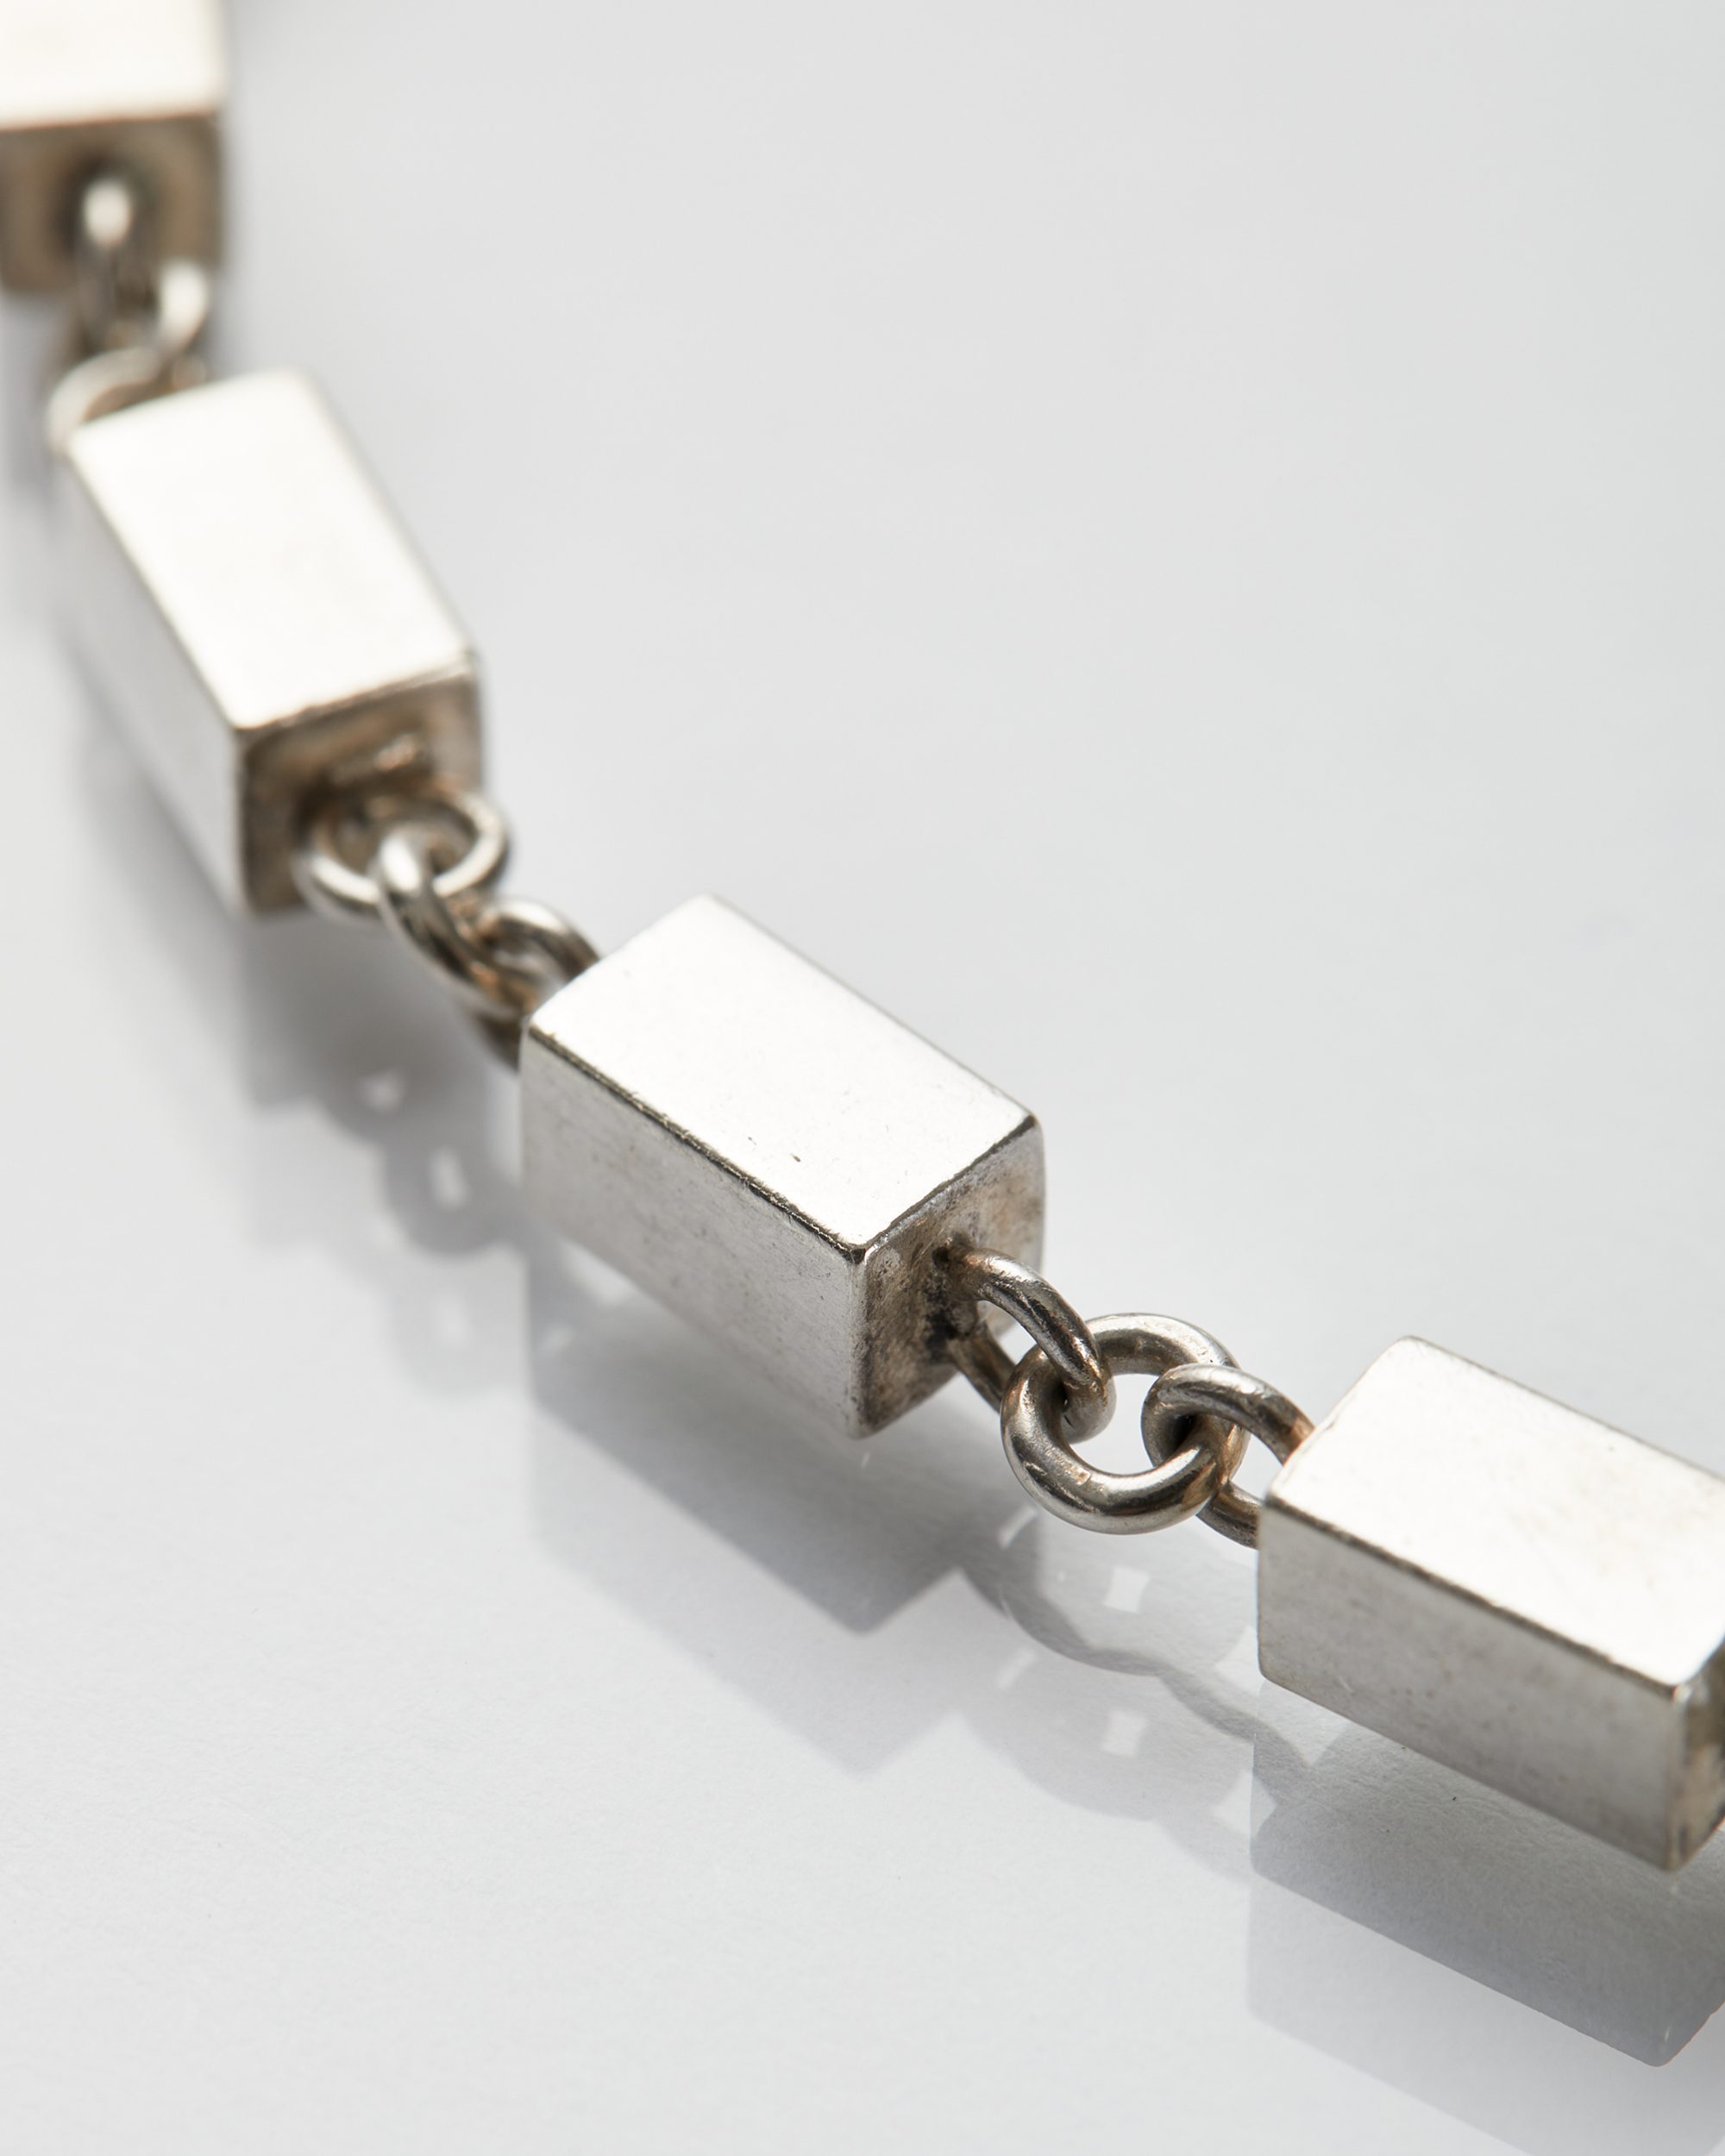 Necklace and bracelet designed by Arvo Saarela, — Modernity